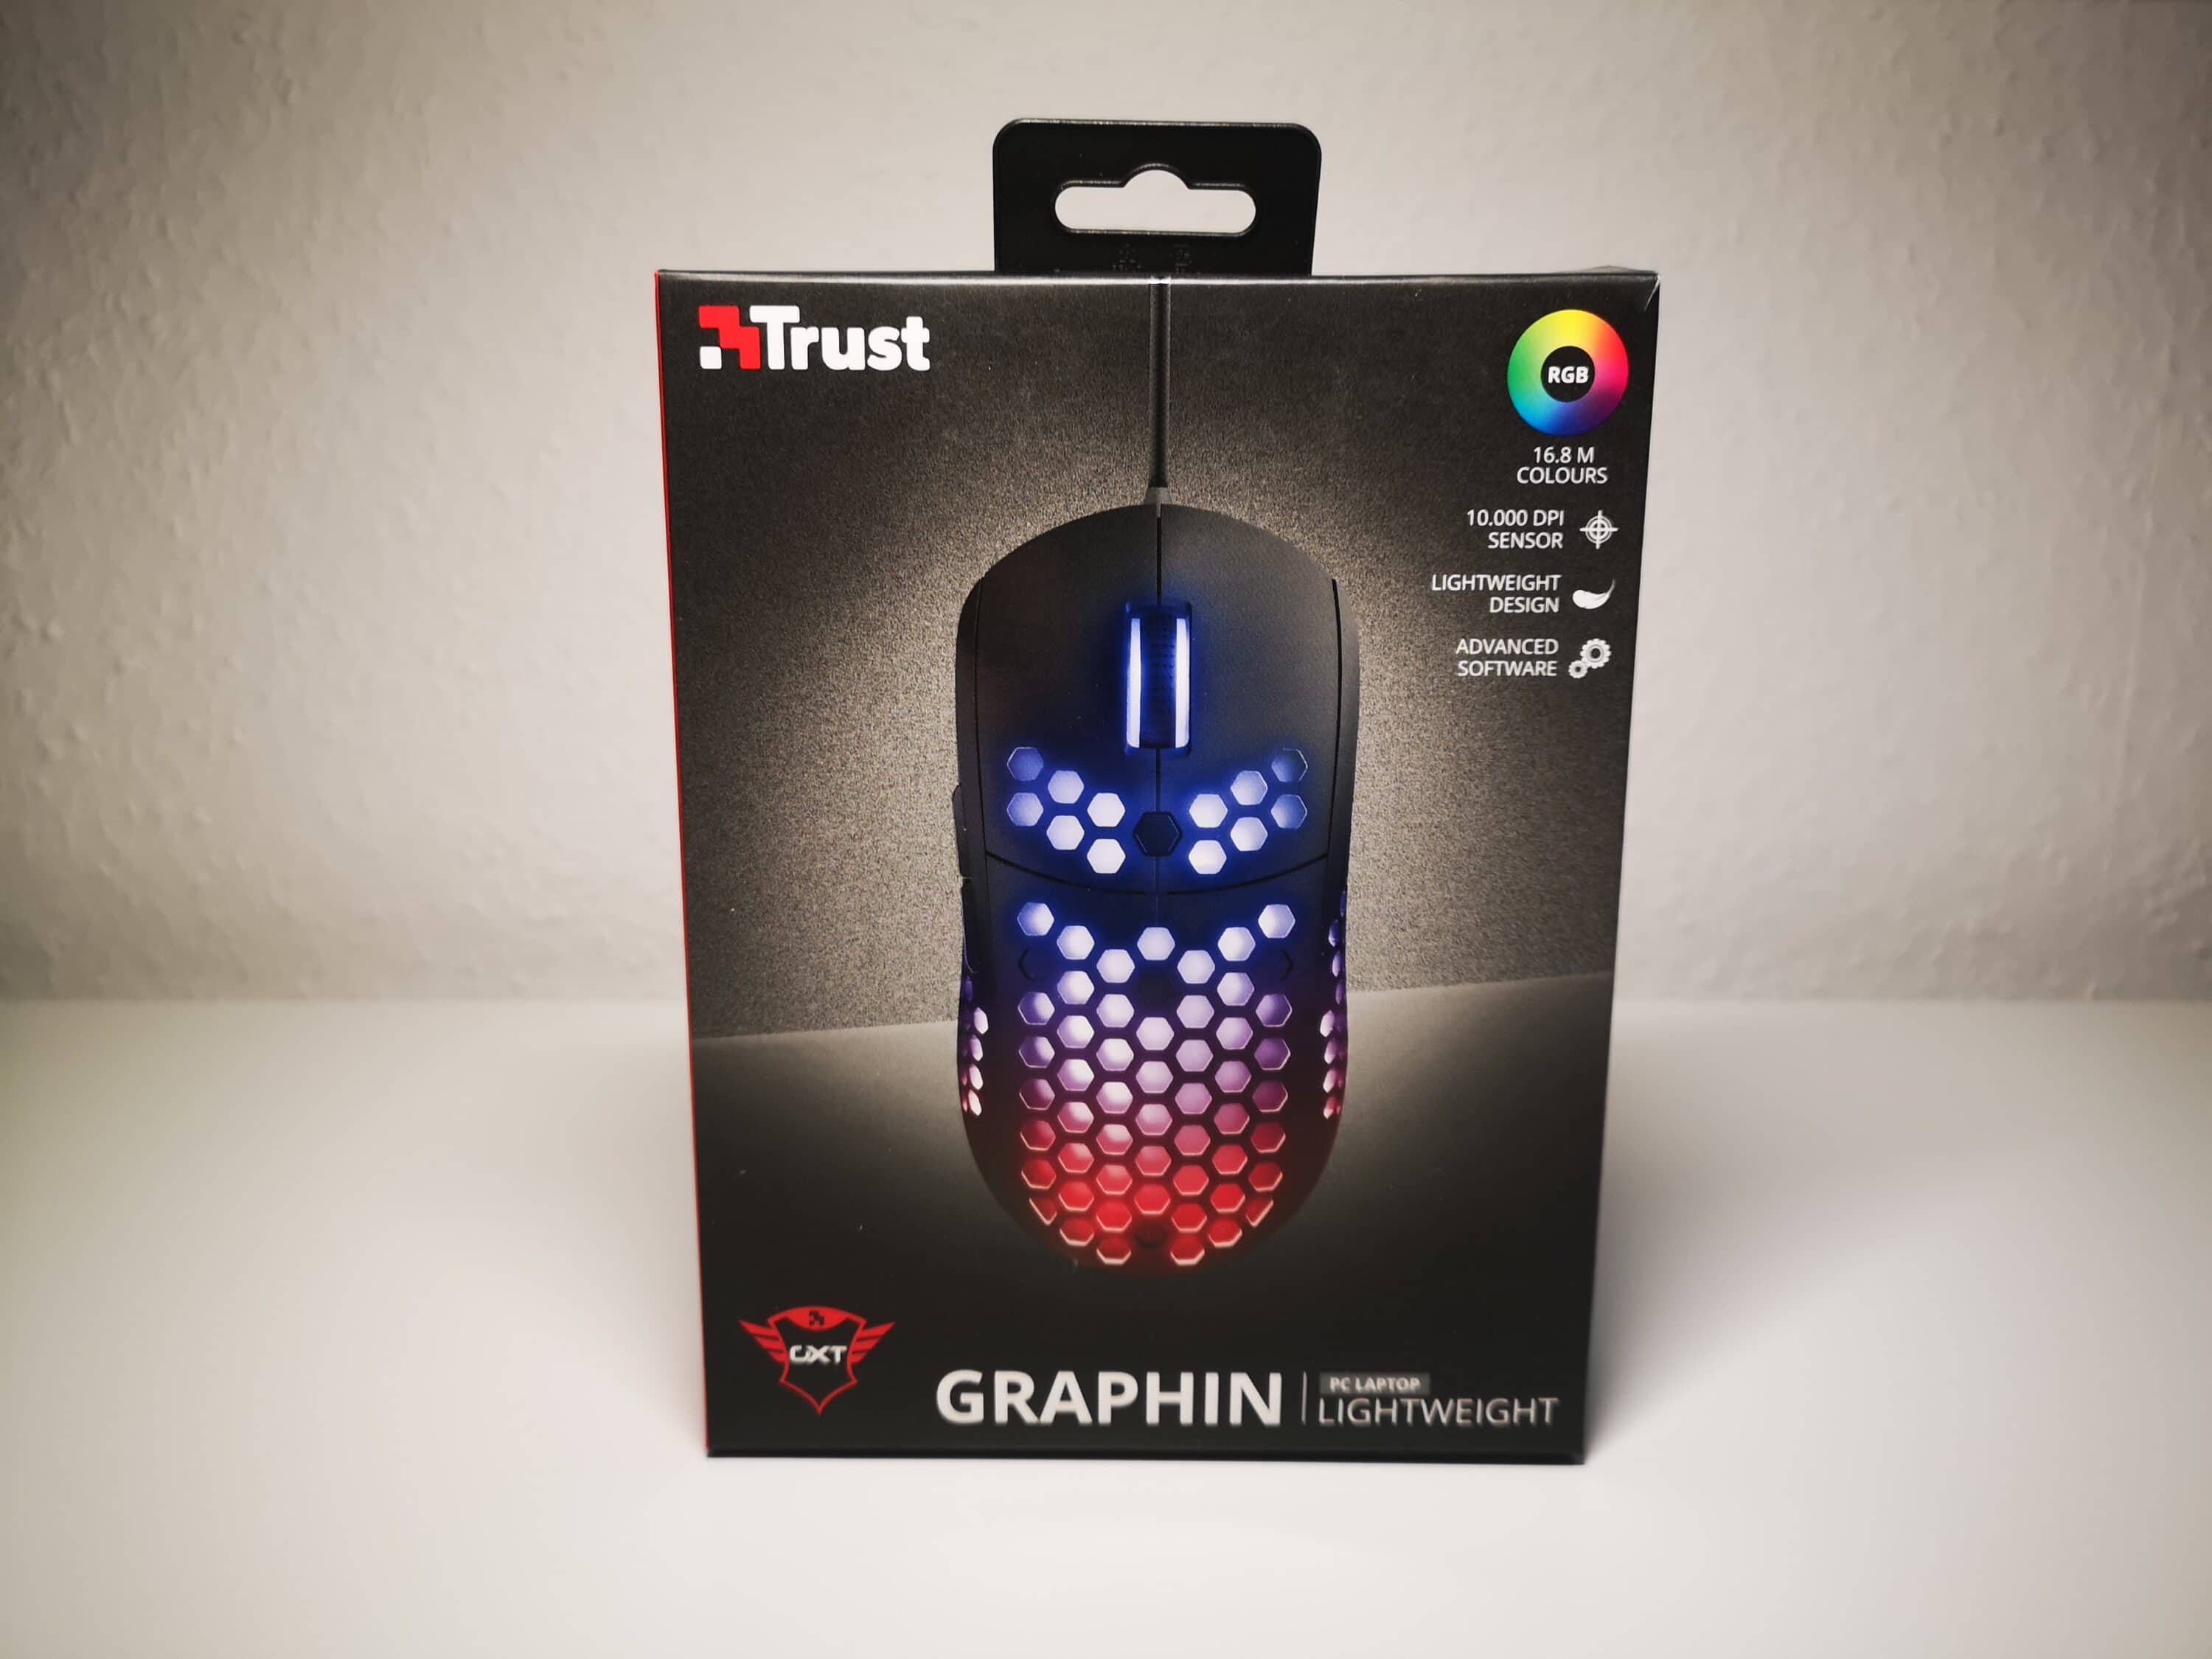 Trust Gxt 960 Graphin The Ultralight Eye Catcher In Test